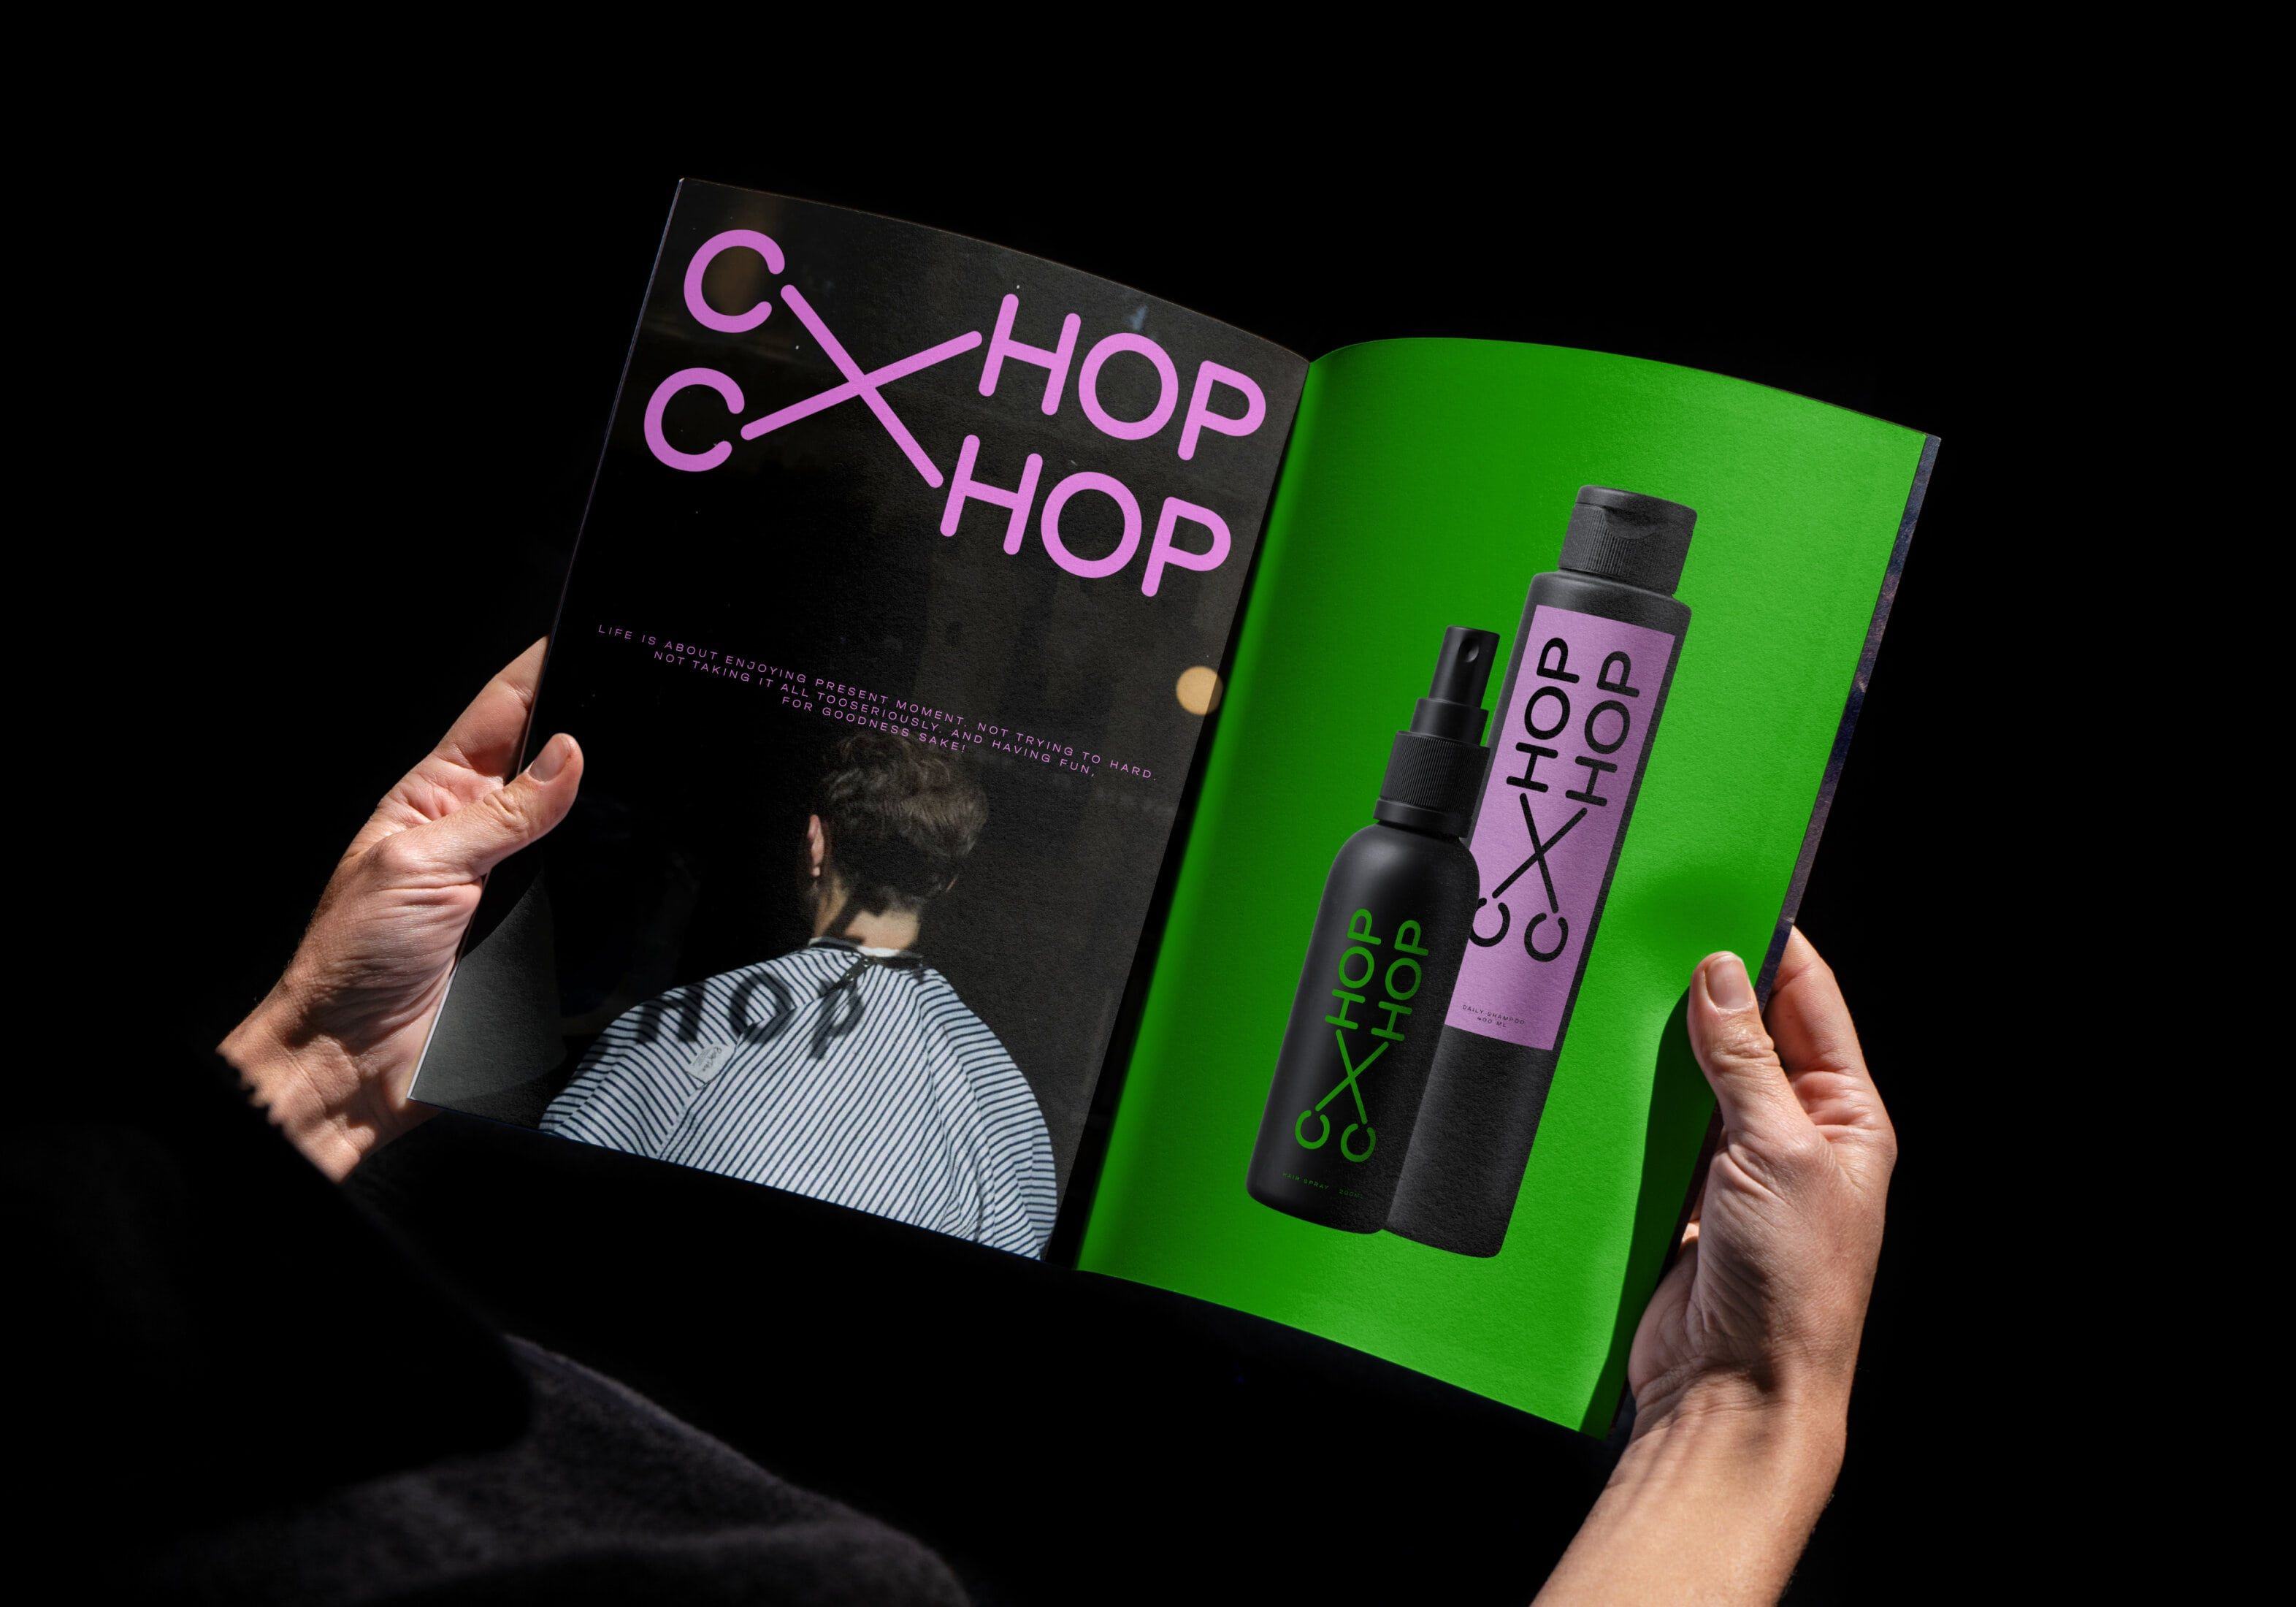 Chop Chop catalog